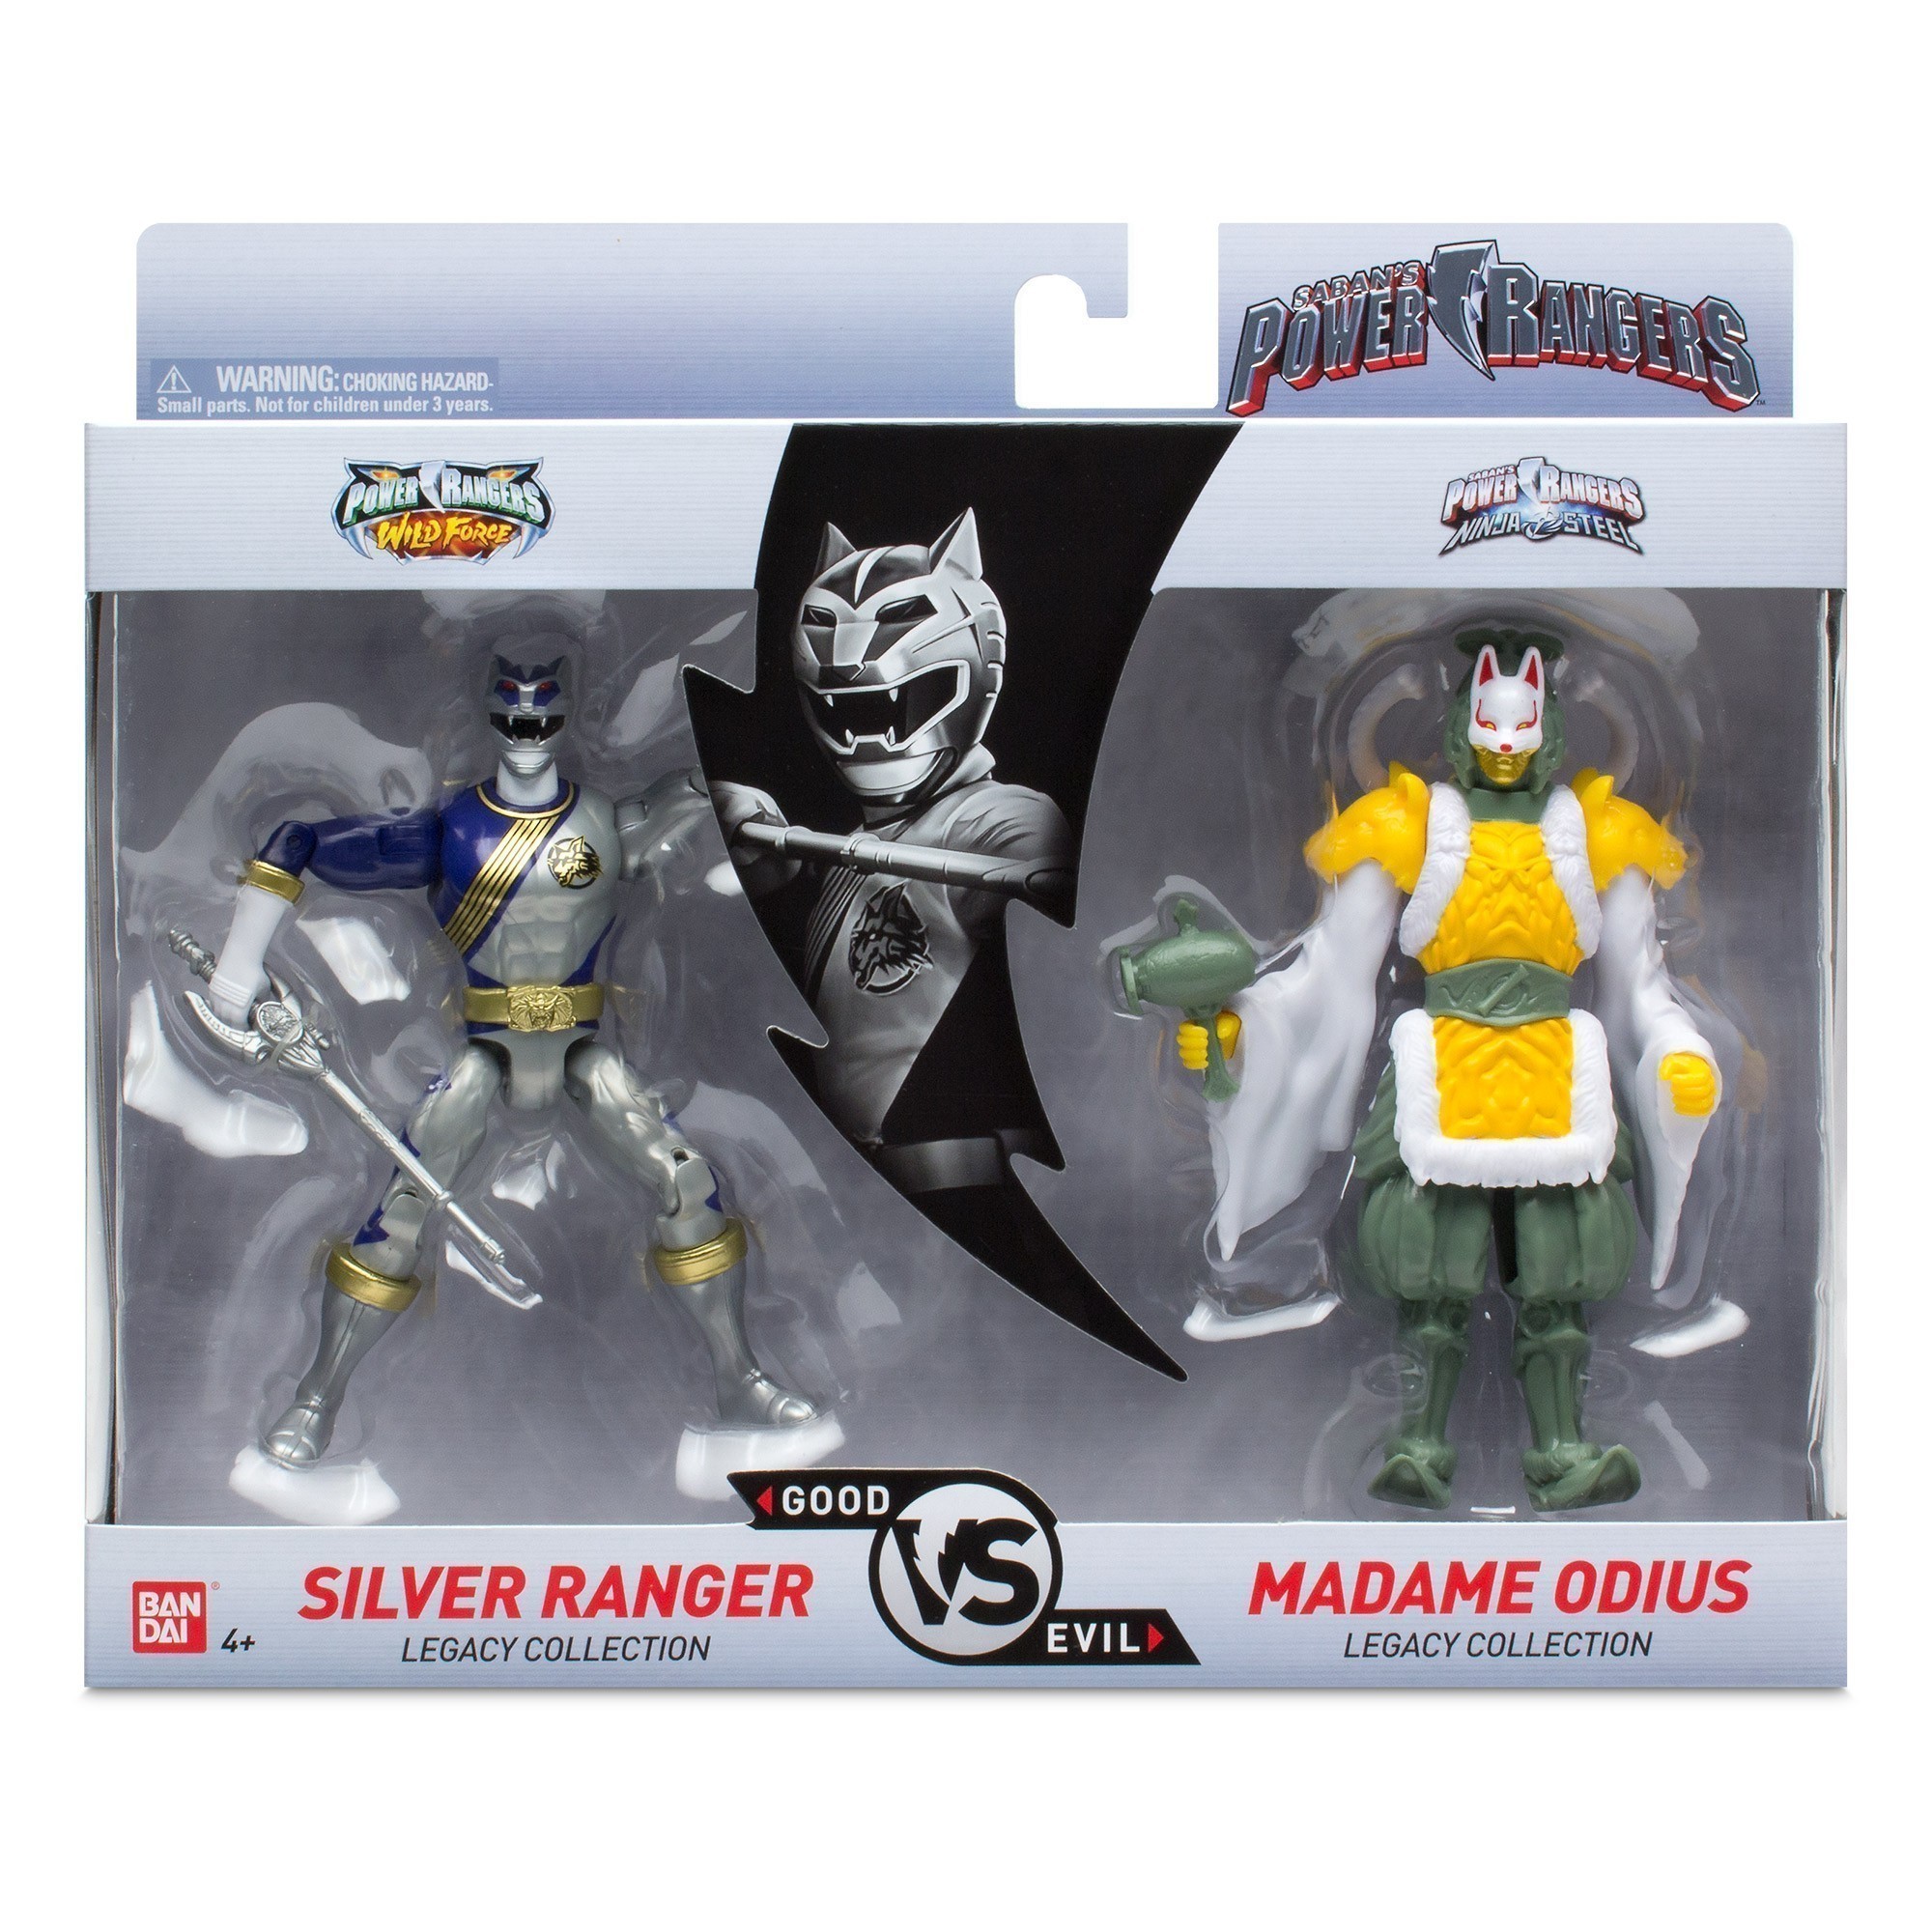 Power Rangers - Legacy Collection - Silver Ranger Vs Madame Odius